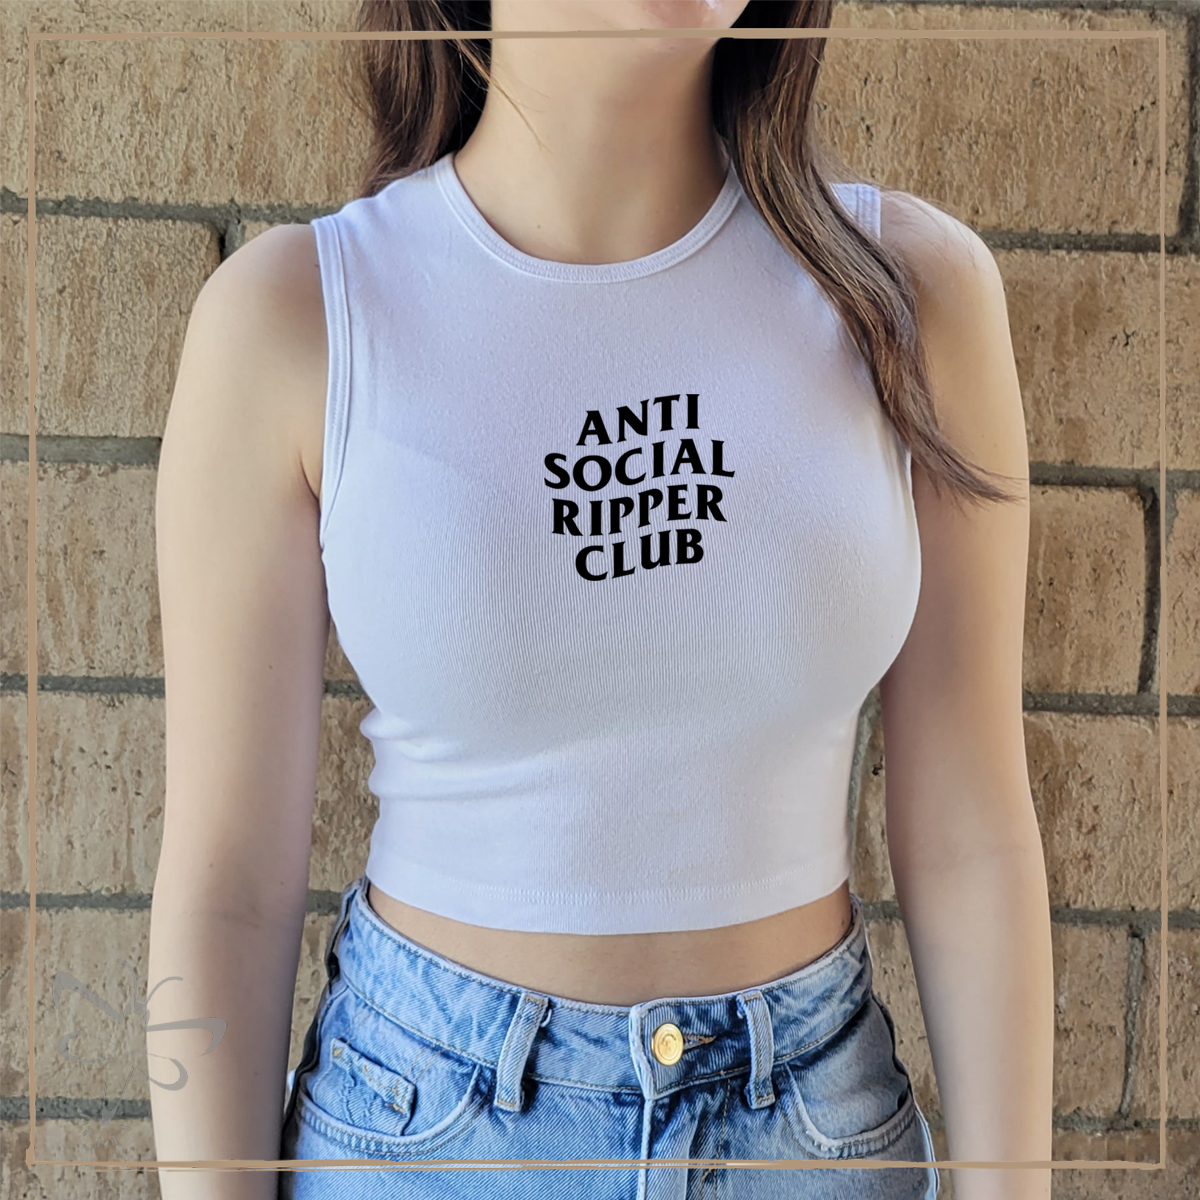 Anti Social Ripper Club - Tank Top/Baby Tee S / White Top